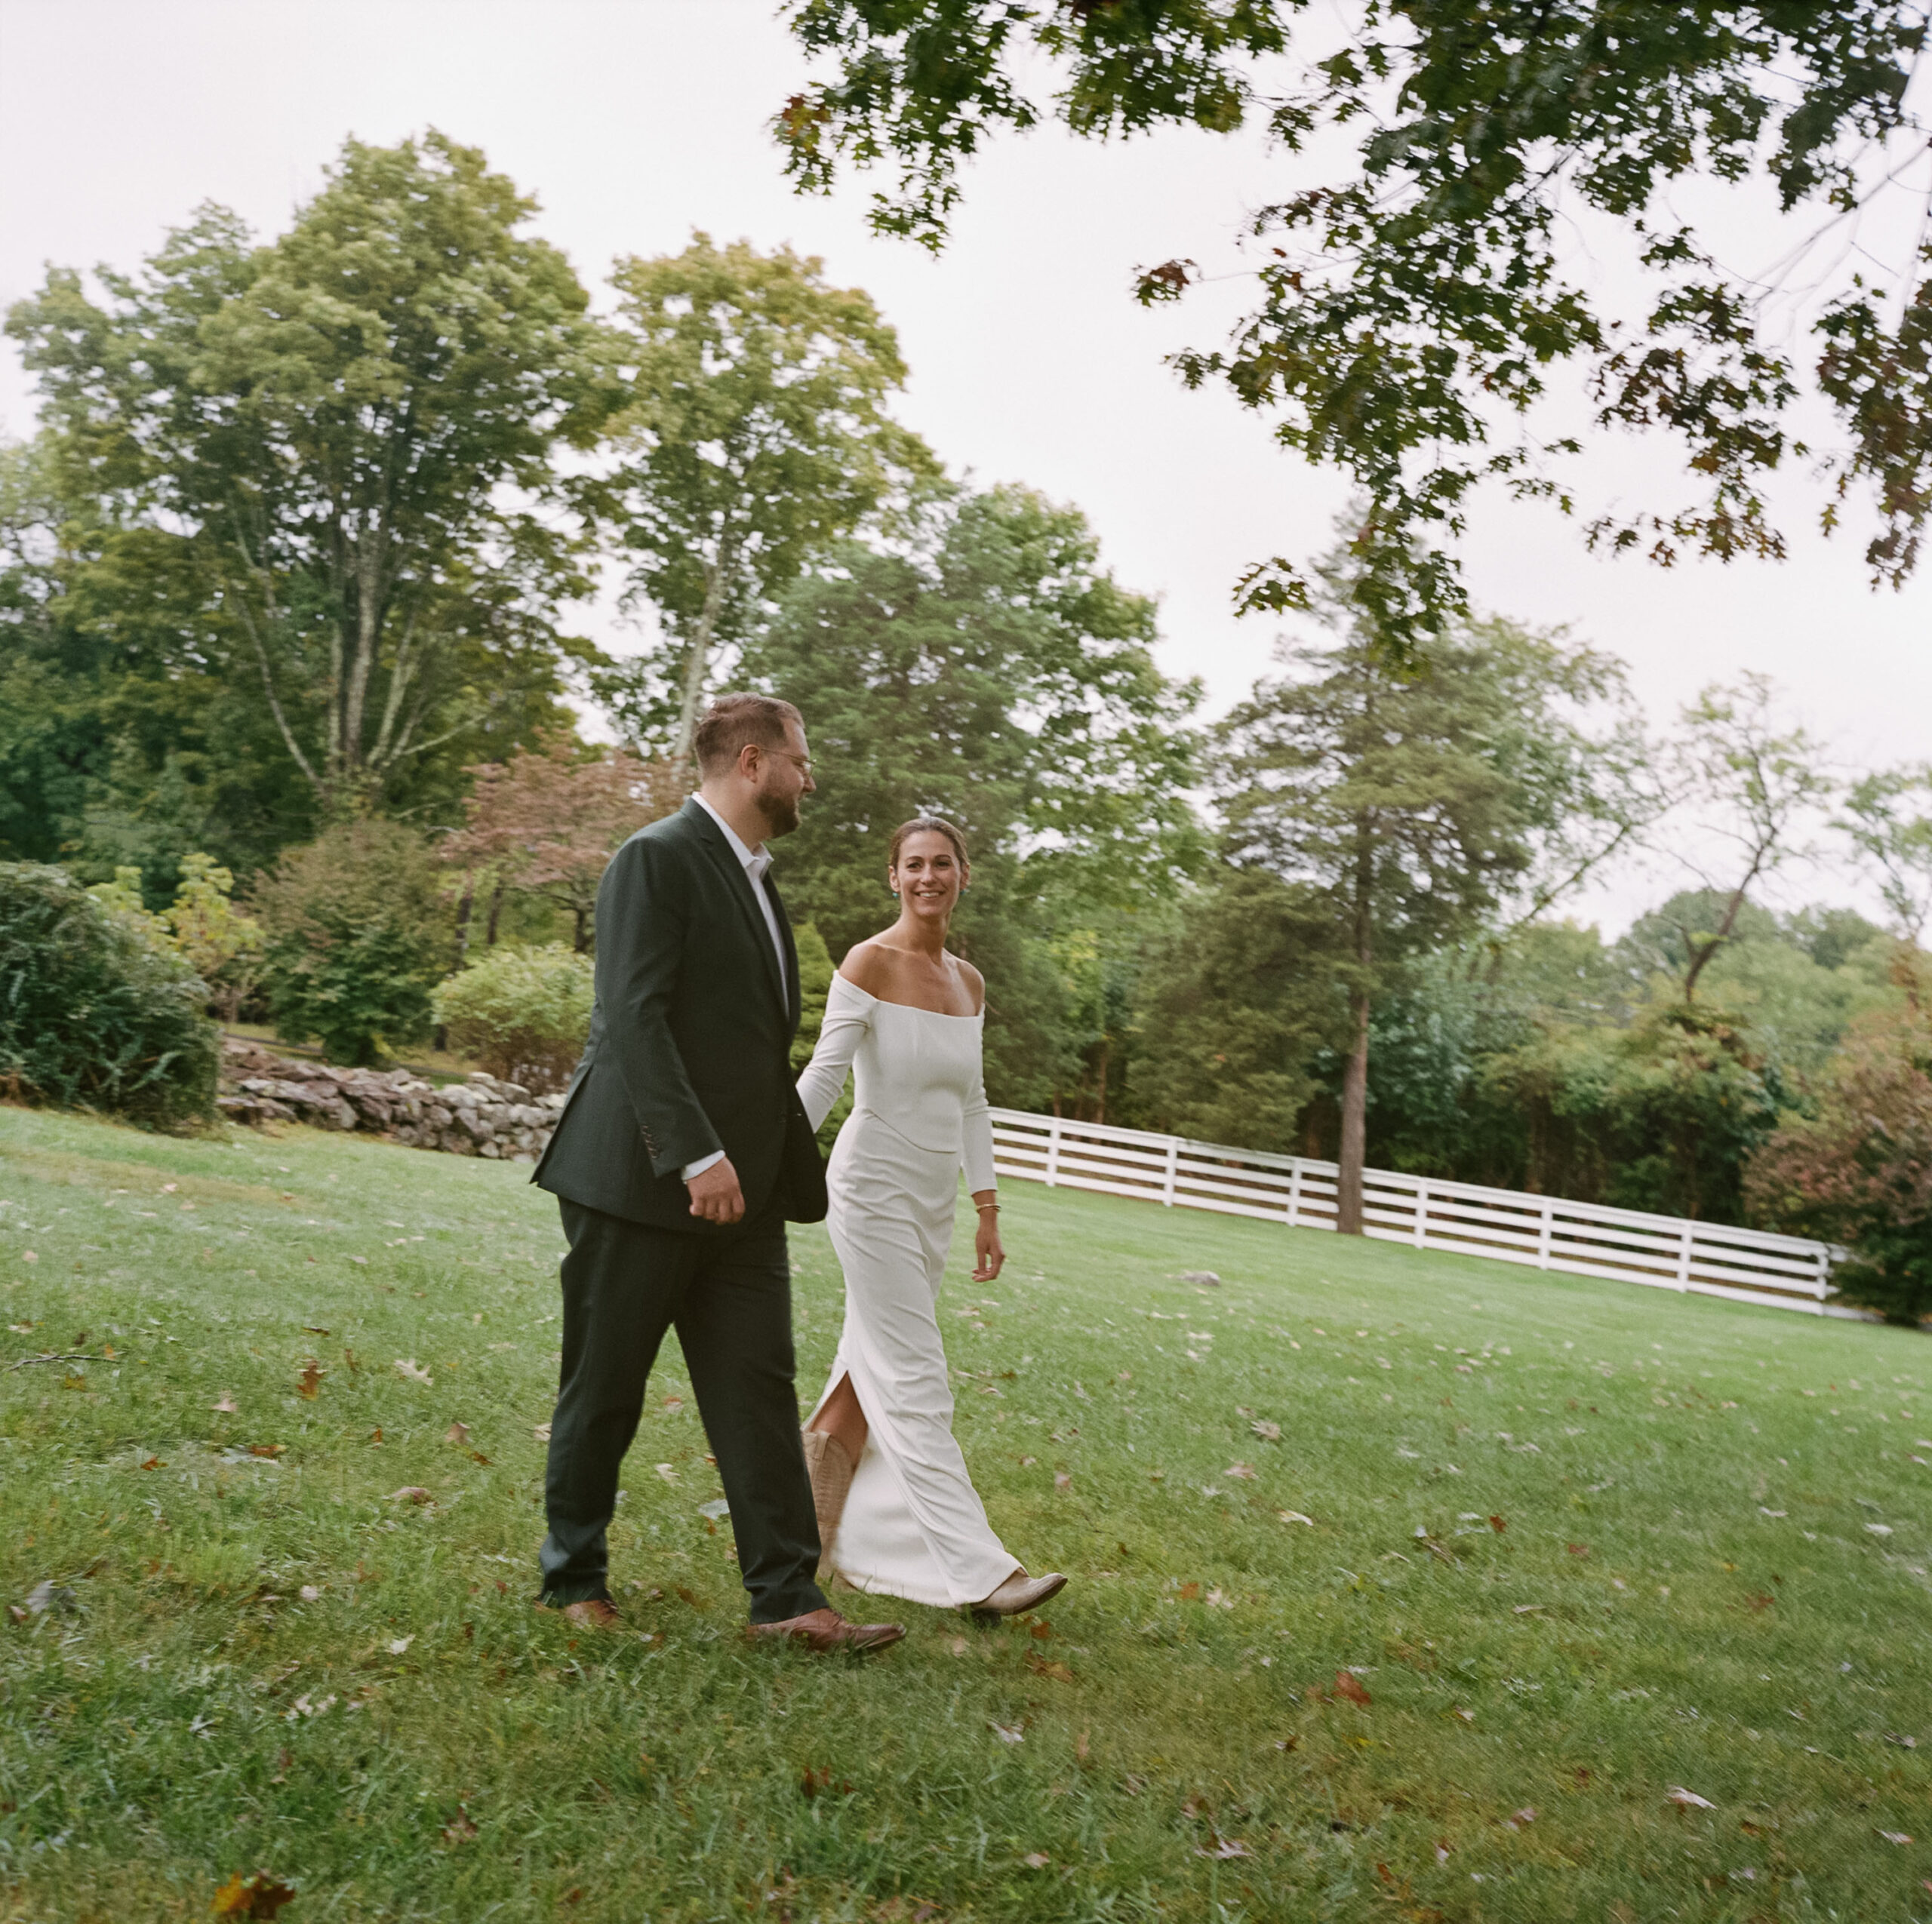 Medium format color film photograph of an elegant bride and groom walk holding hands after their wedding ceremony at Chimney Hill Estate Inn in Lambertville, NJ